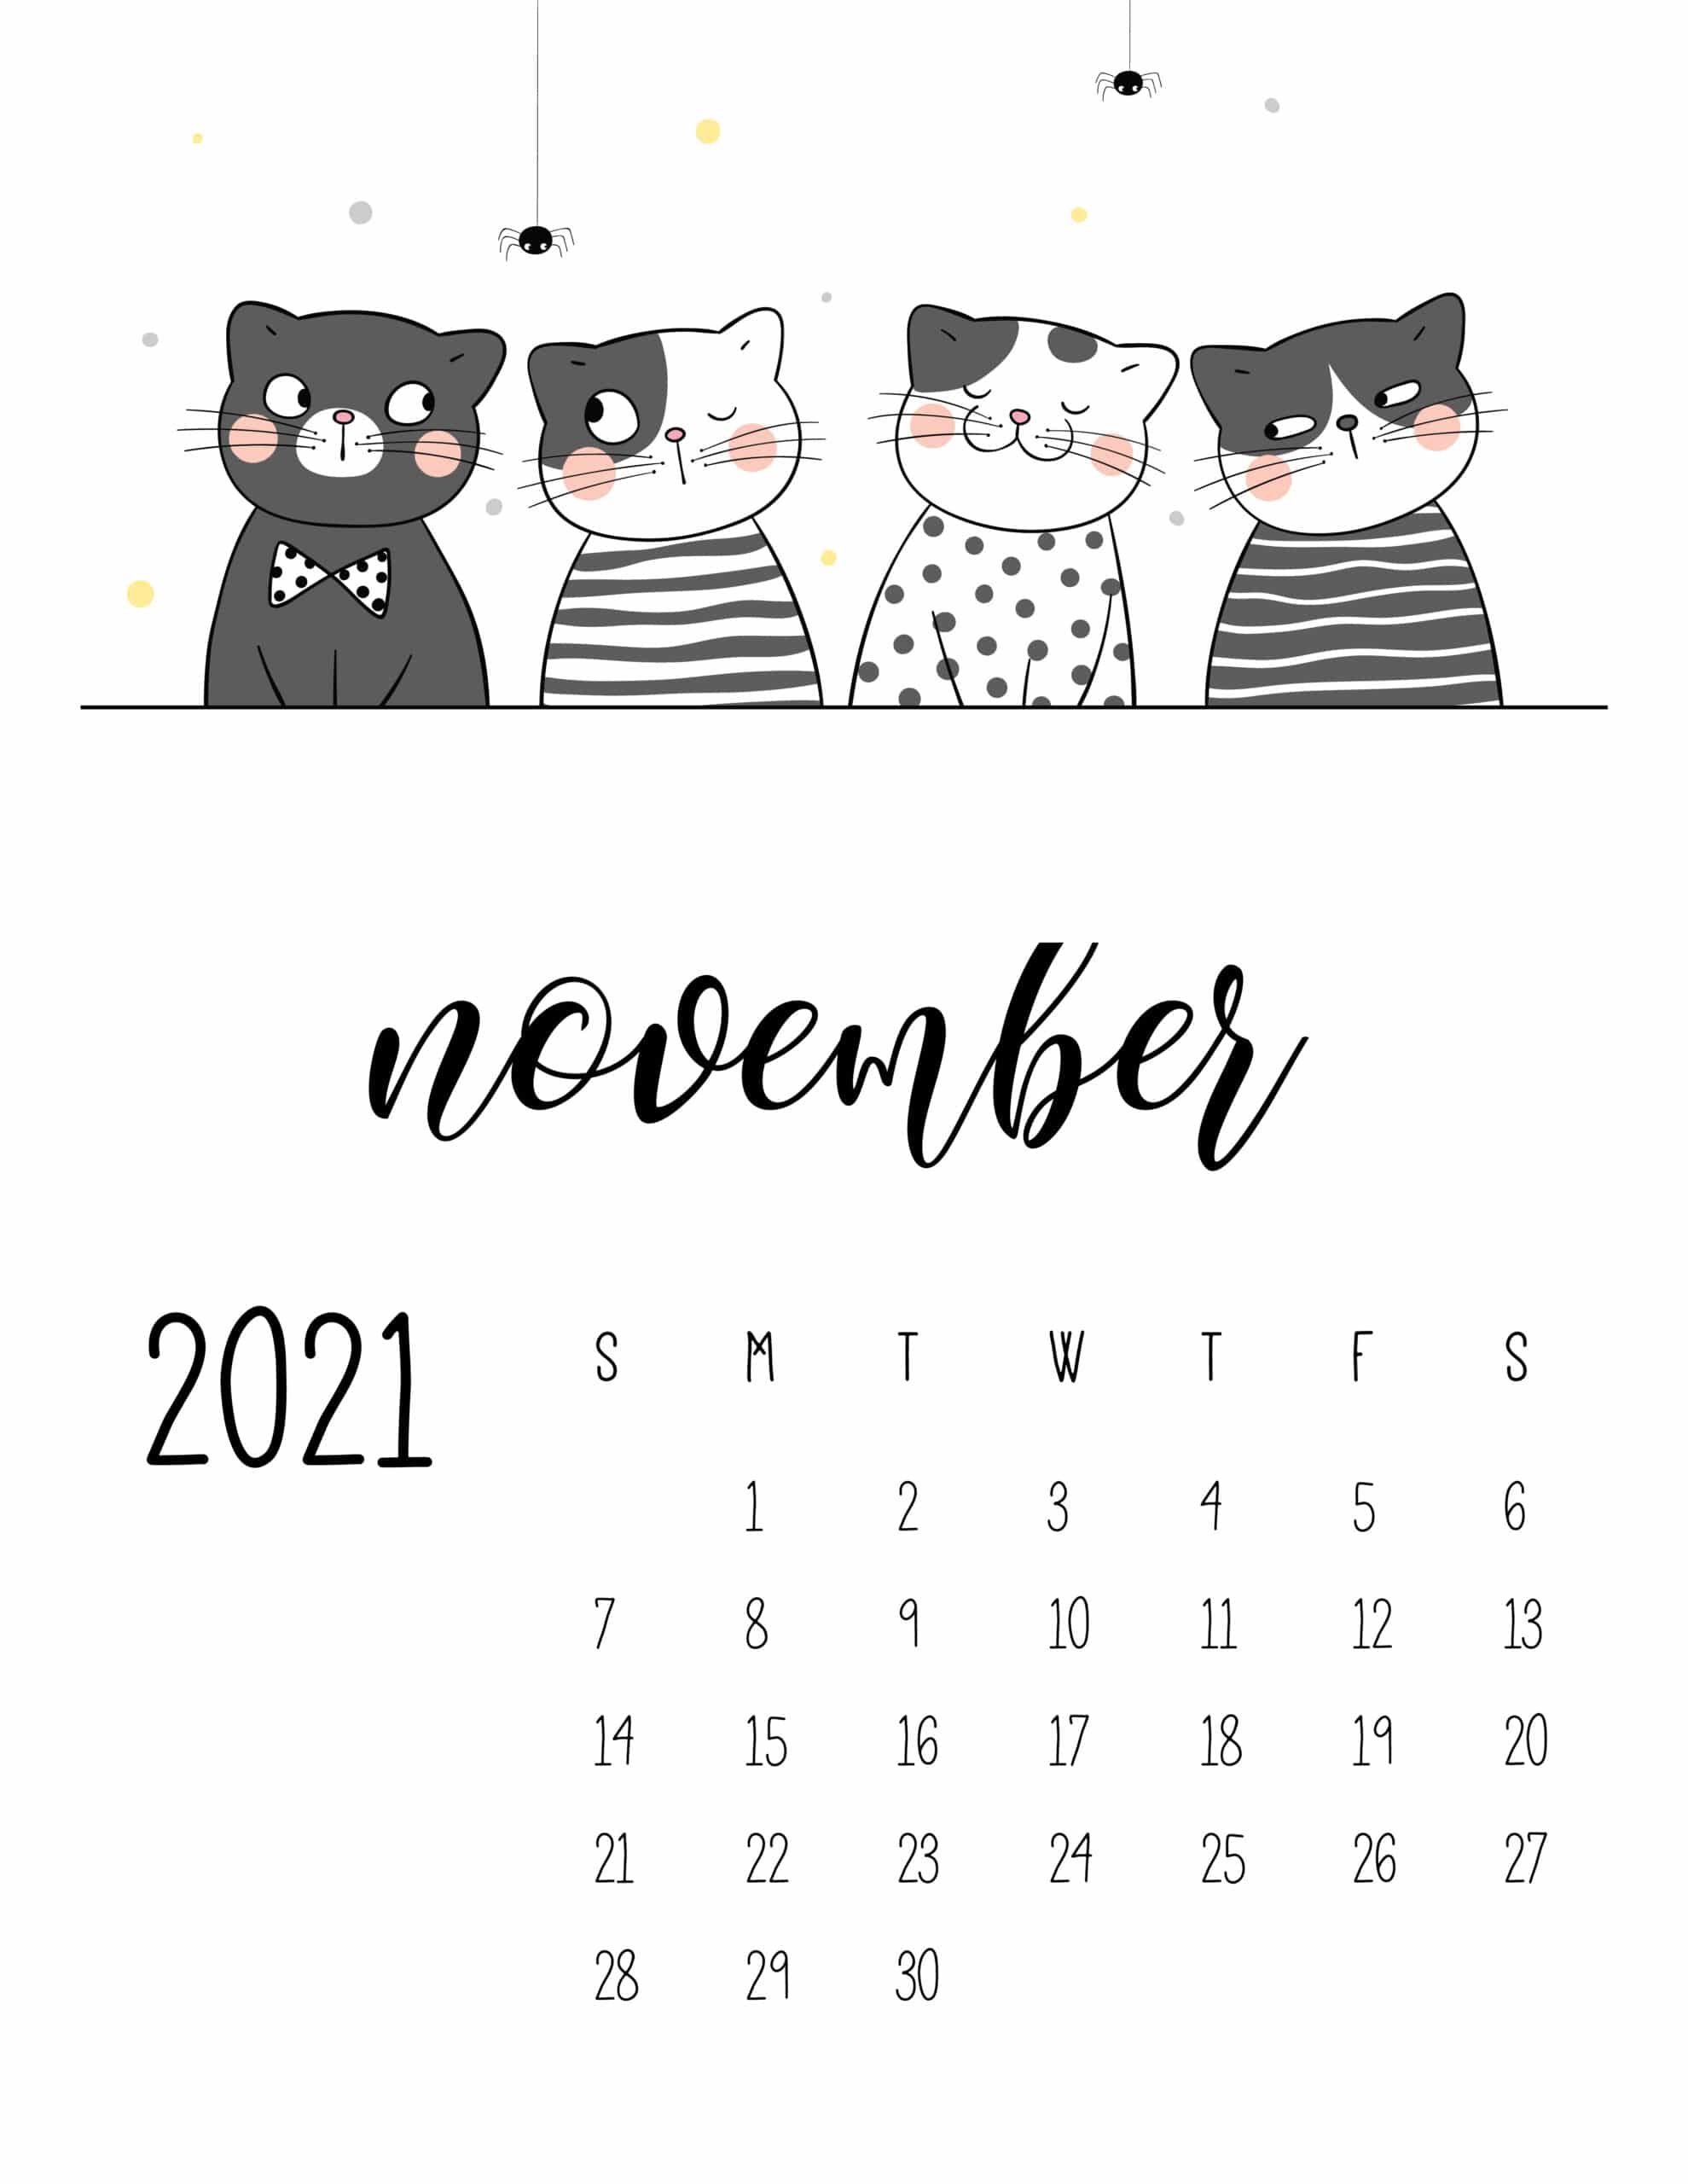 Cute November 2021 Calendar